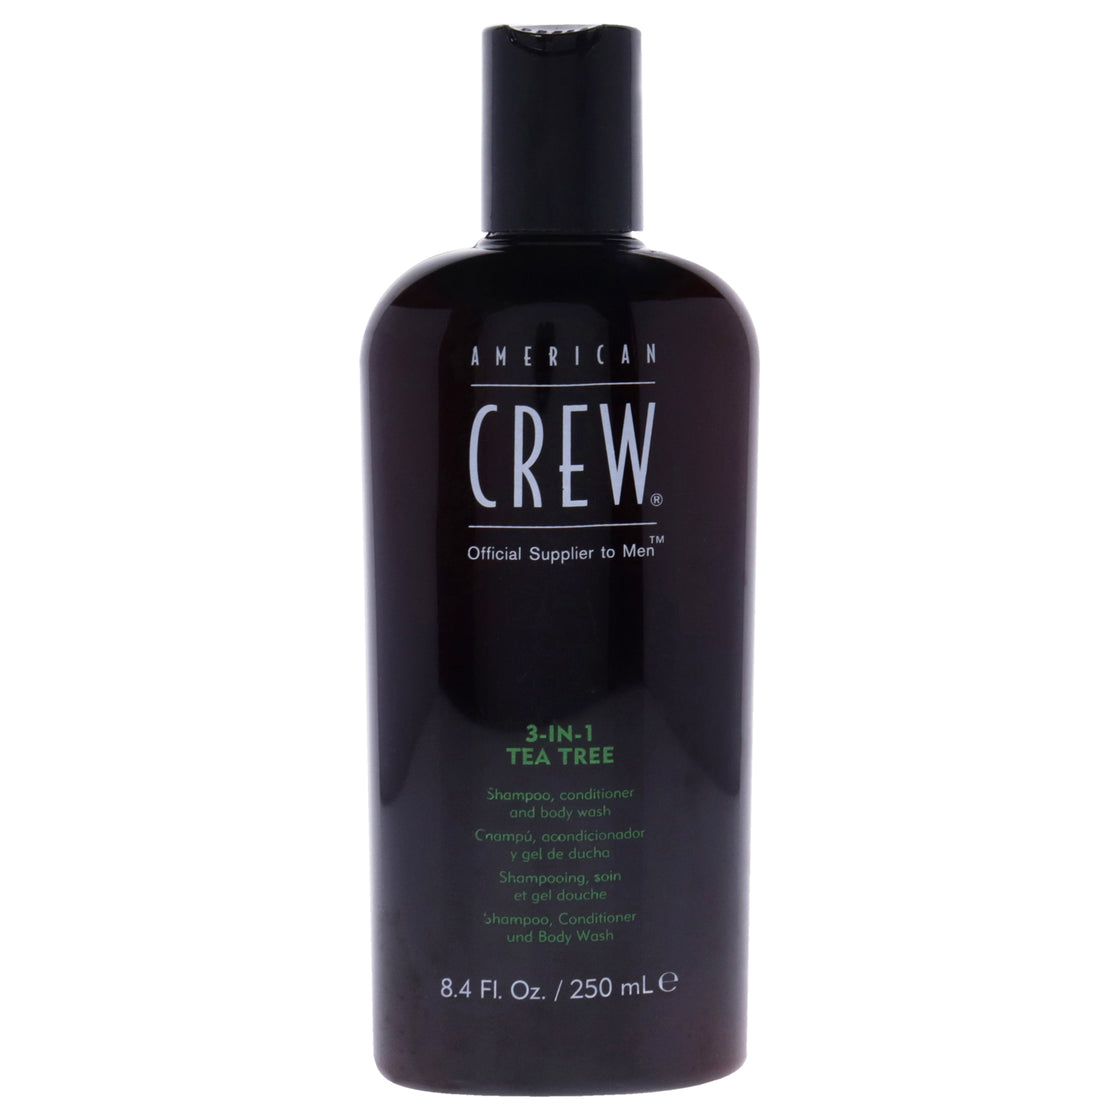 3-In-1 Tea Tree Shampoo, Conditioner and Body Wash by American Crew for Men - 8.4 oz Shampoo, Conditioner and Body Wash